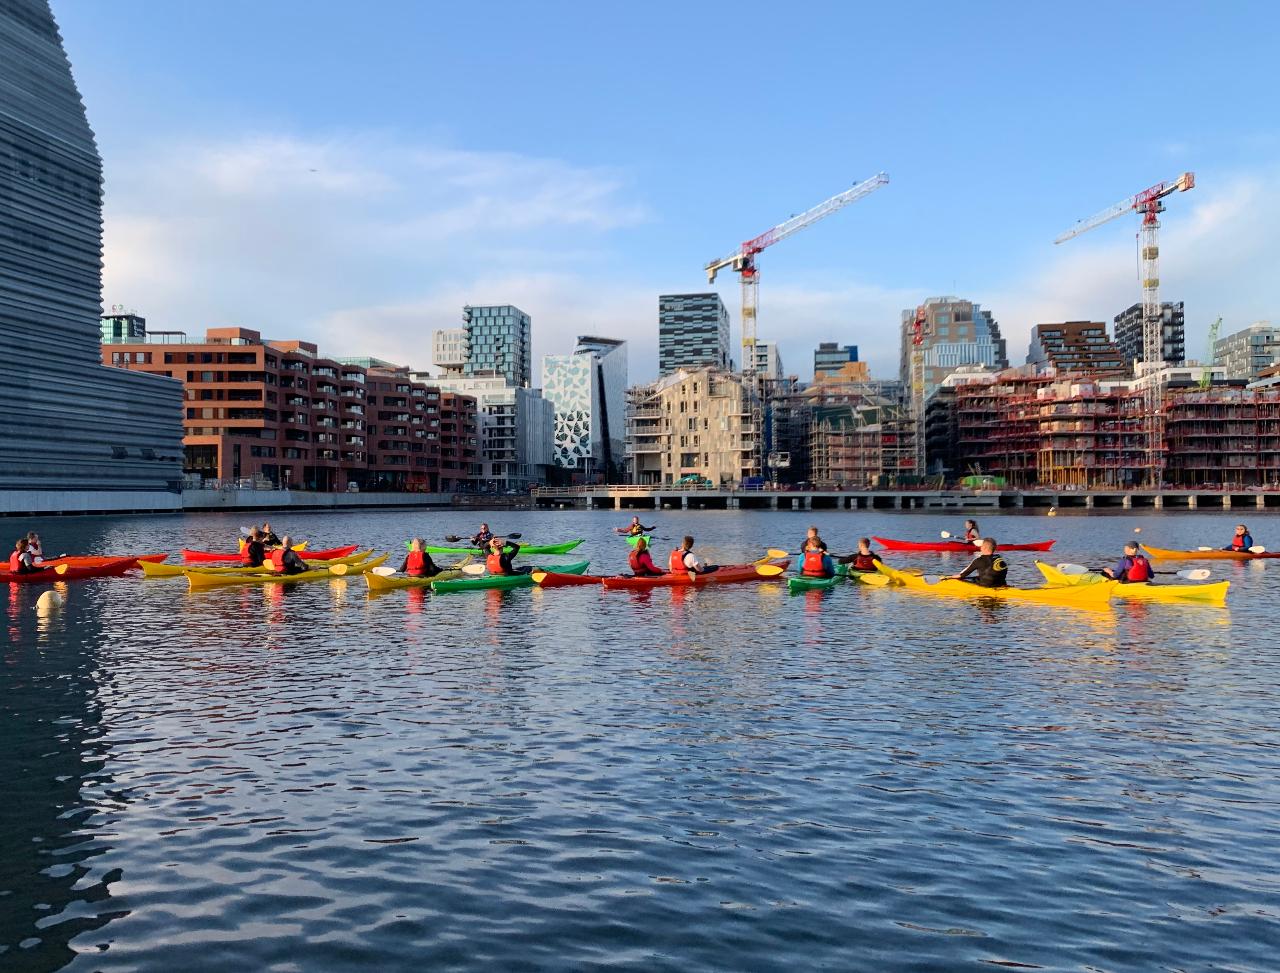 3hr Våttkort Introduction to Sea Kayaking Course – Bispevika, Oslo